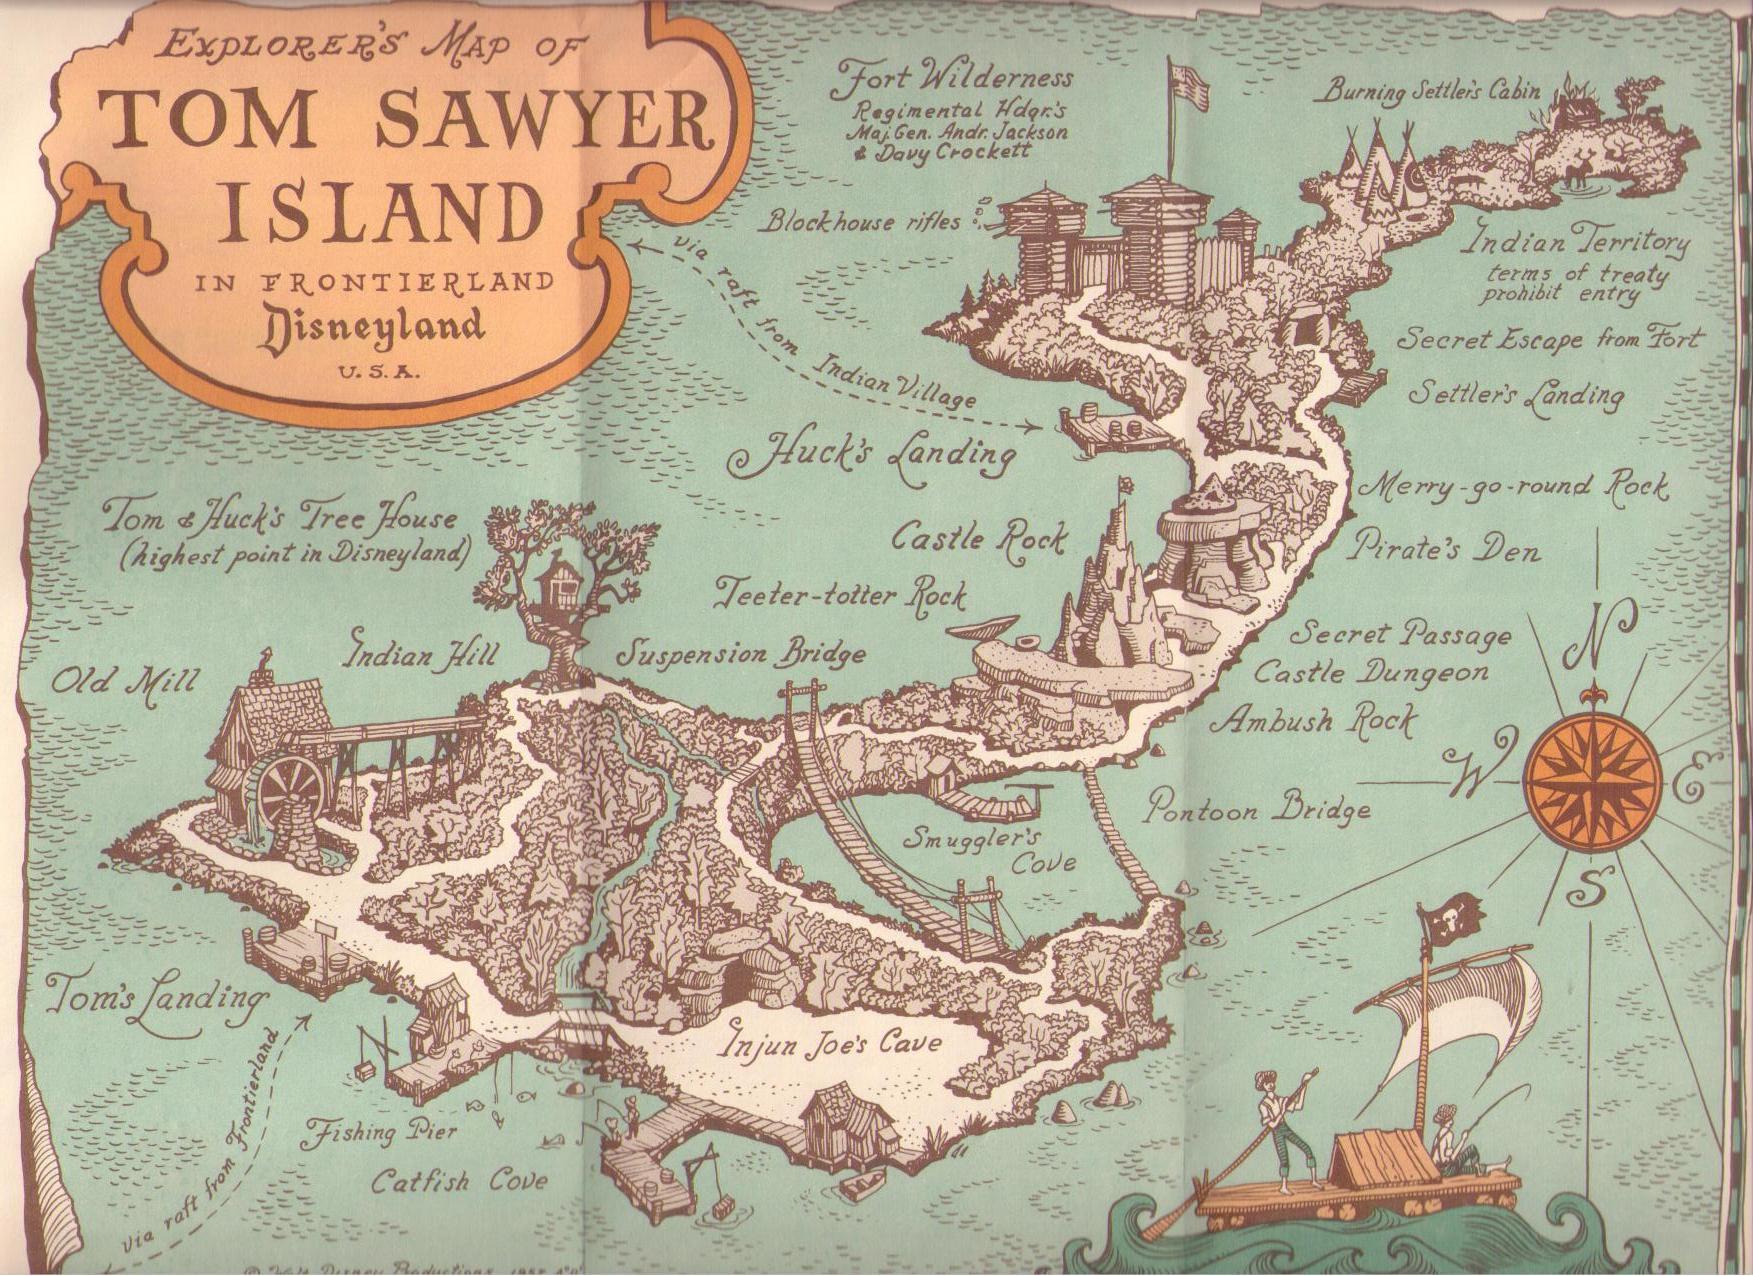 Tom Sawyer Island pamphlet – map side (not a postcard)